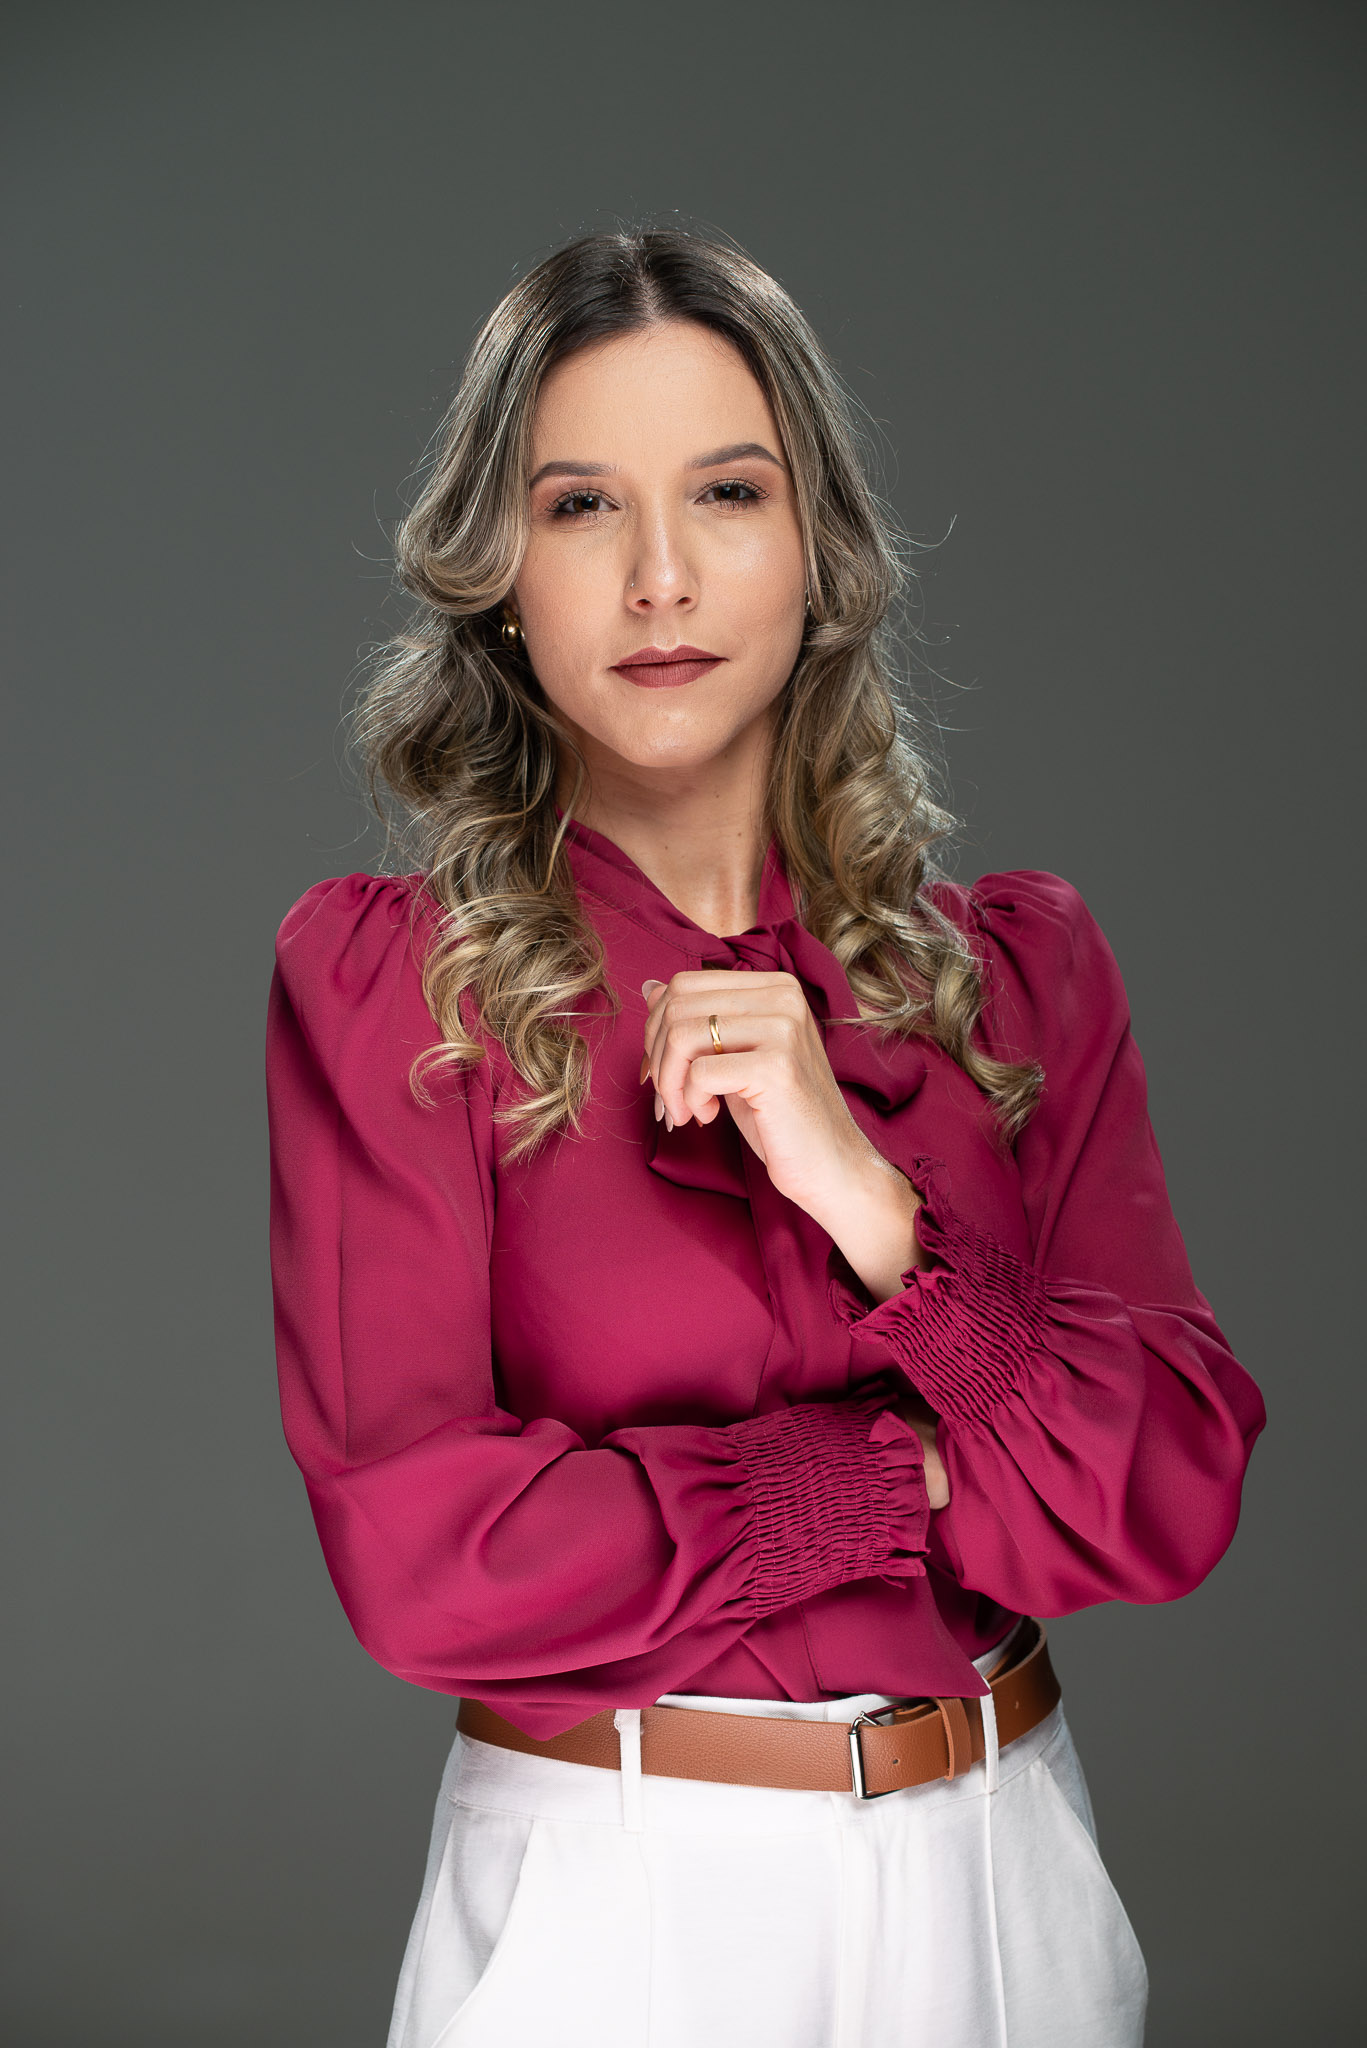 Cassiele Fernanda Rocha Duarte